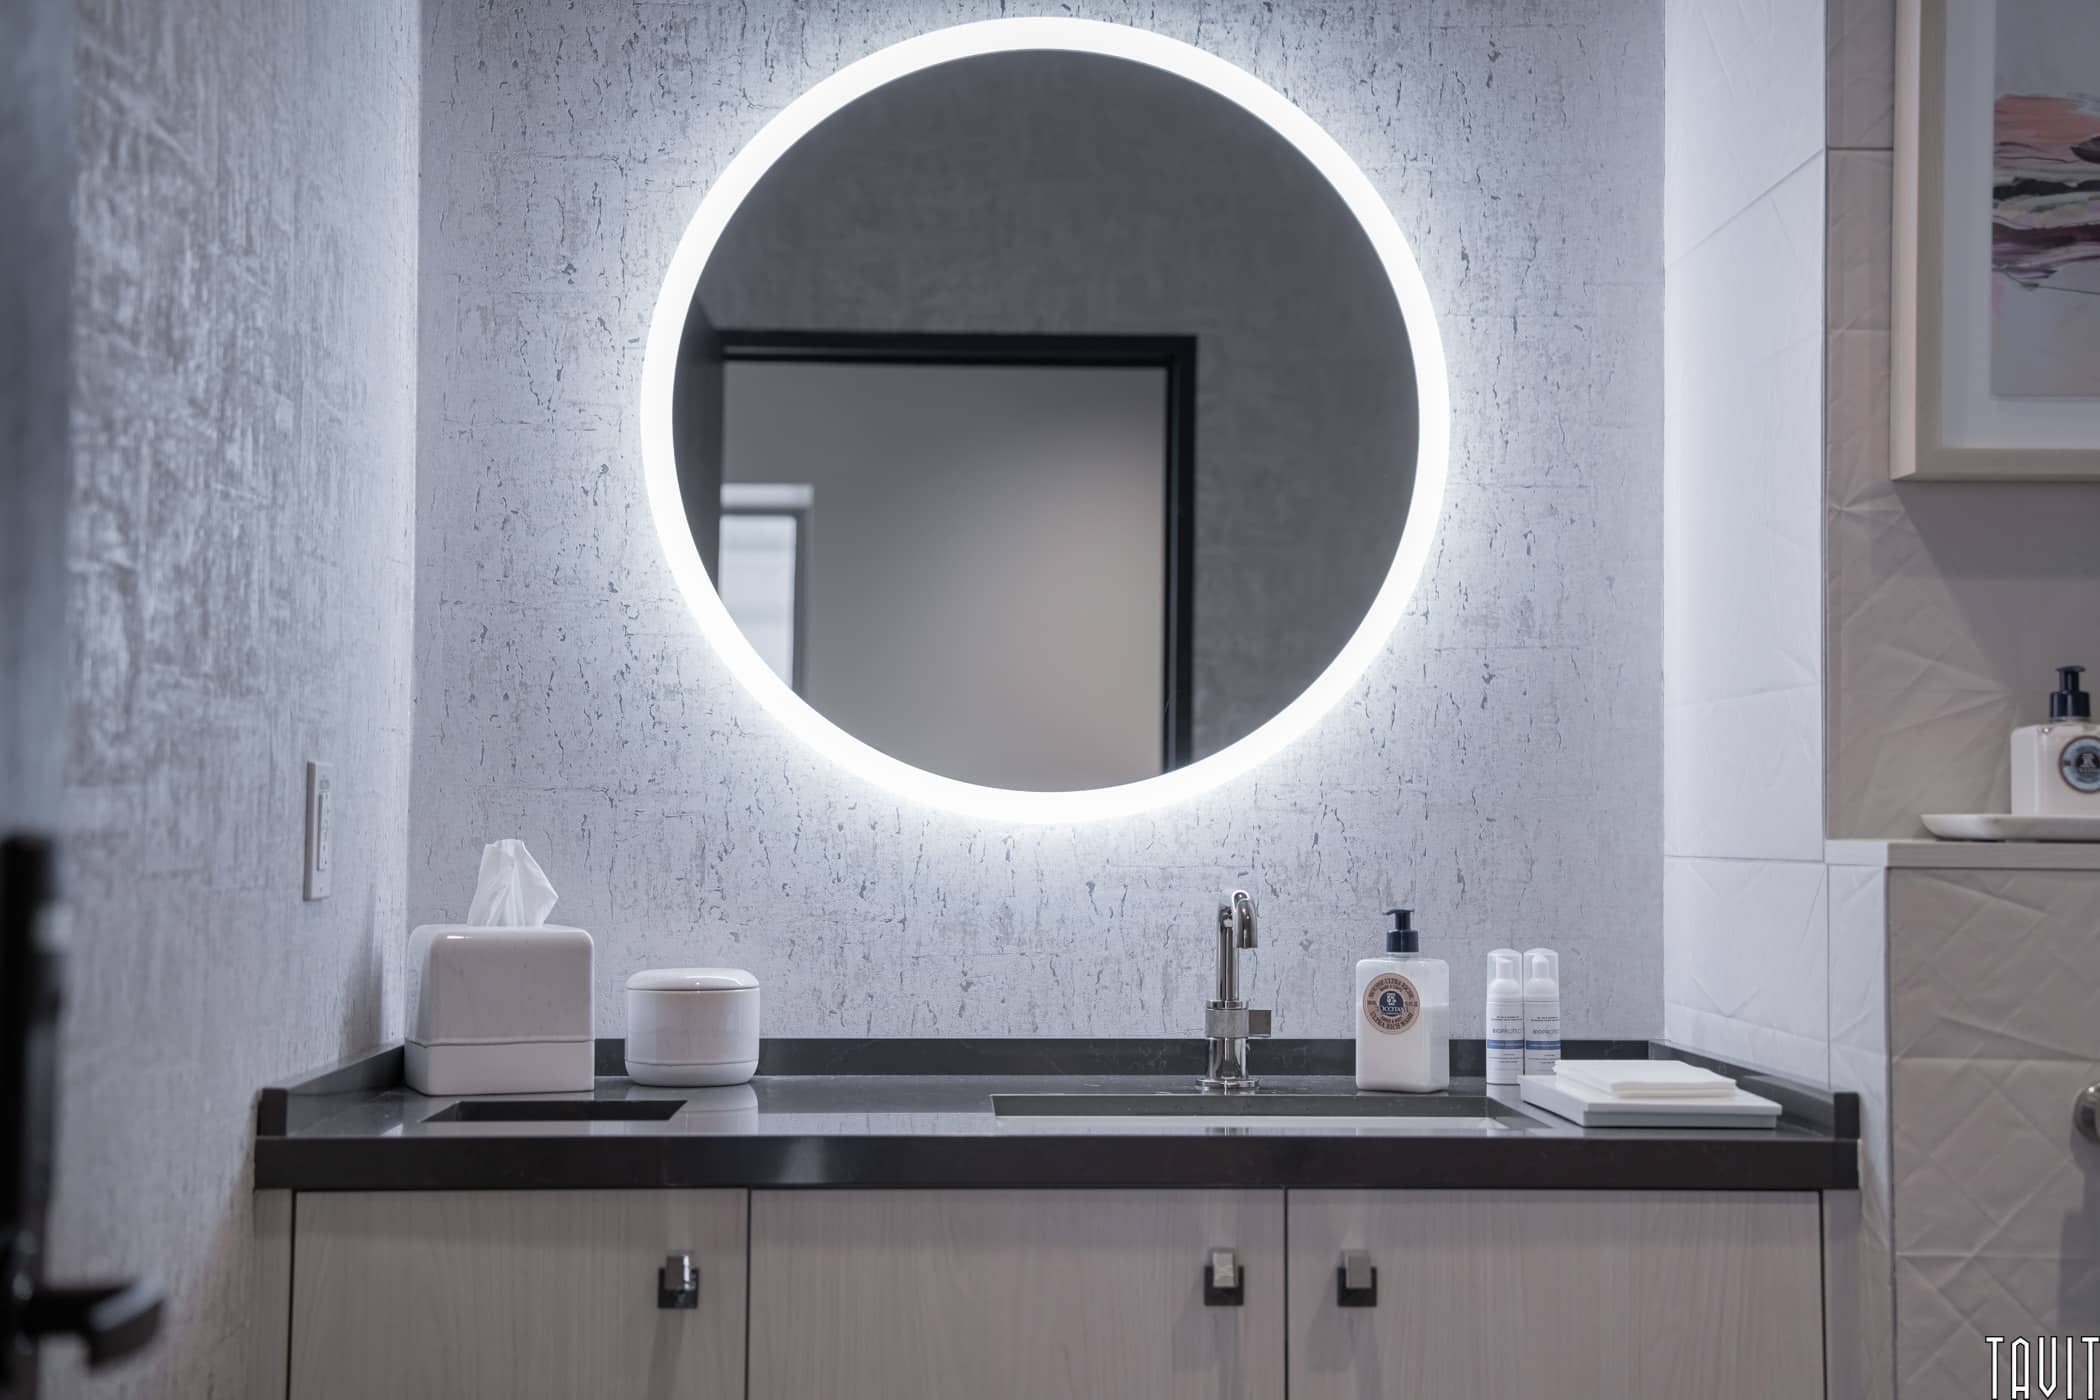 Jetlinx bathroom sink and mirror